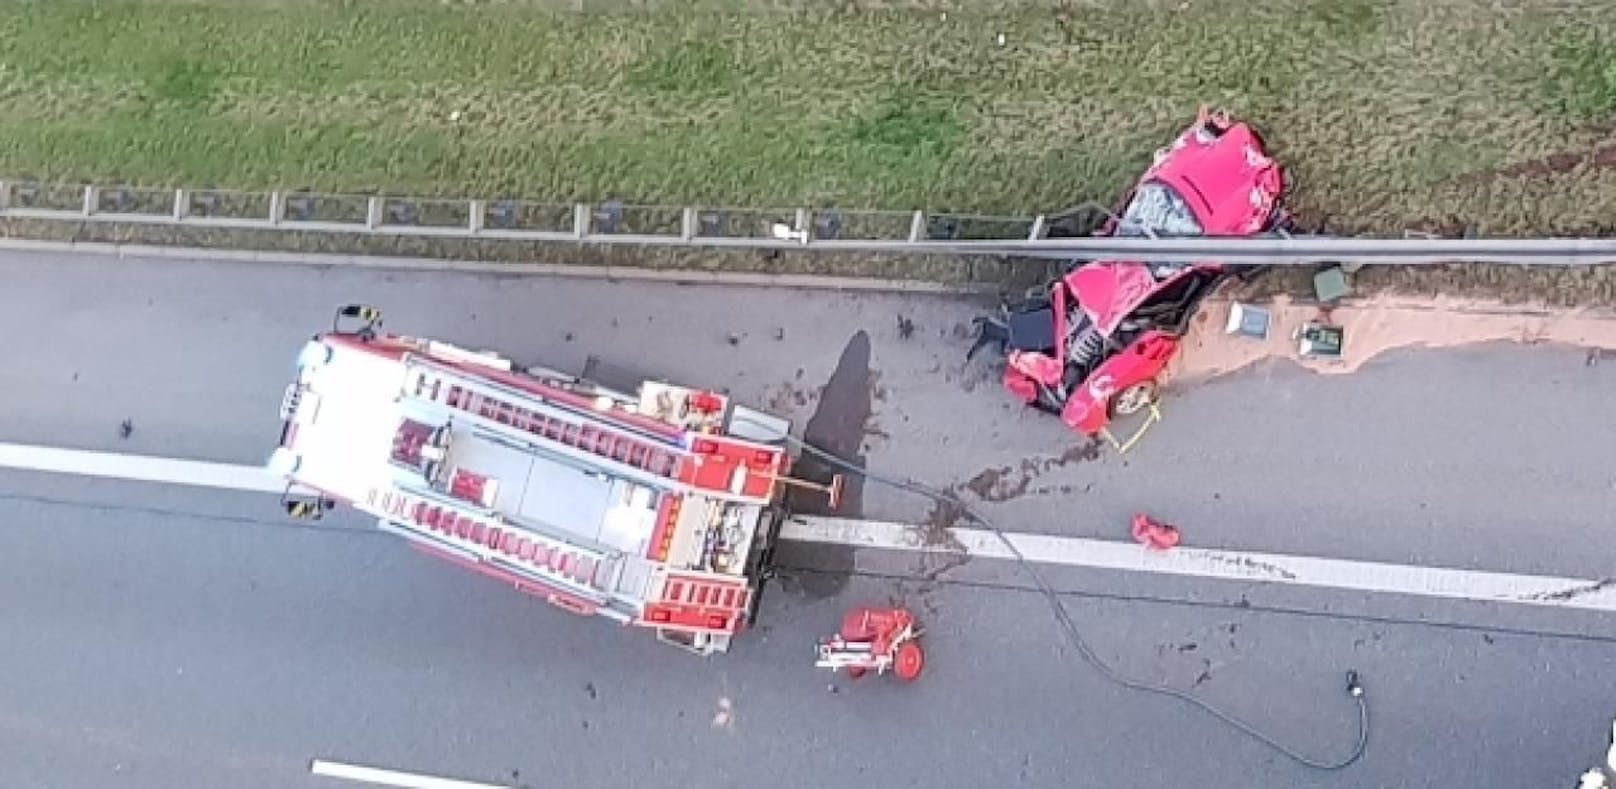 Der Ferrari wurde bei dem Unfall völlig zerstört